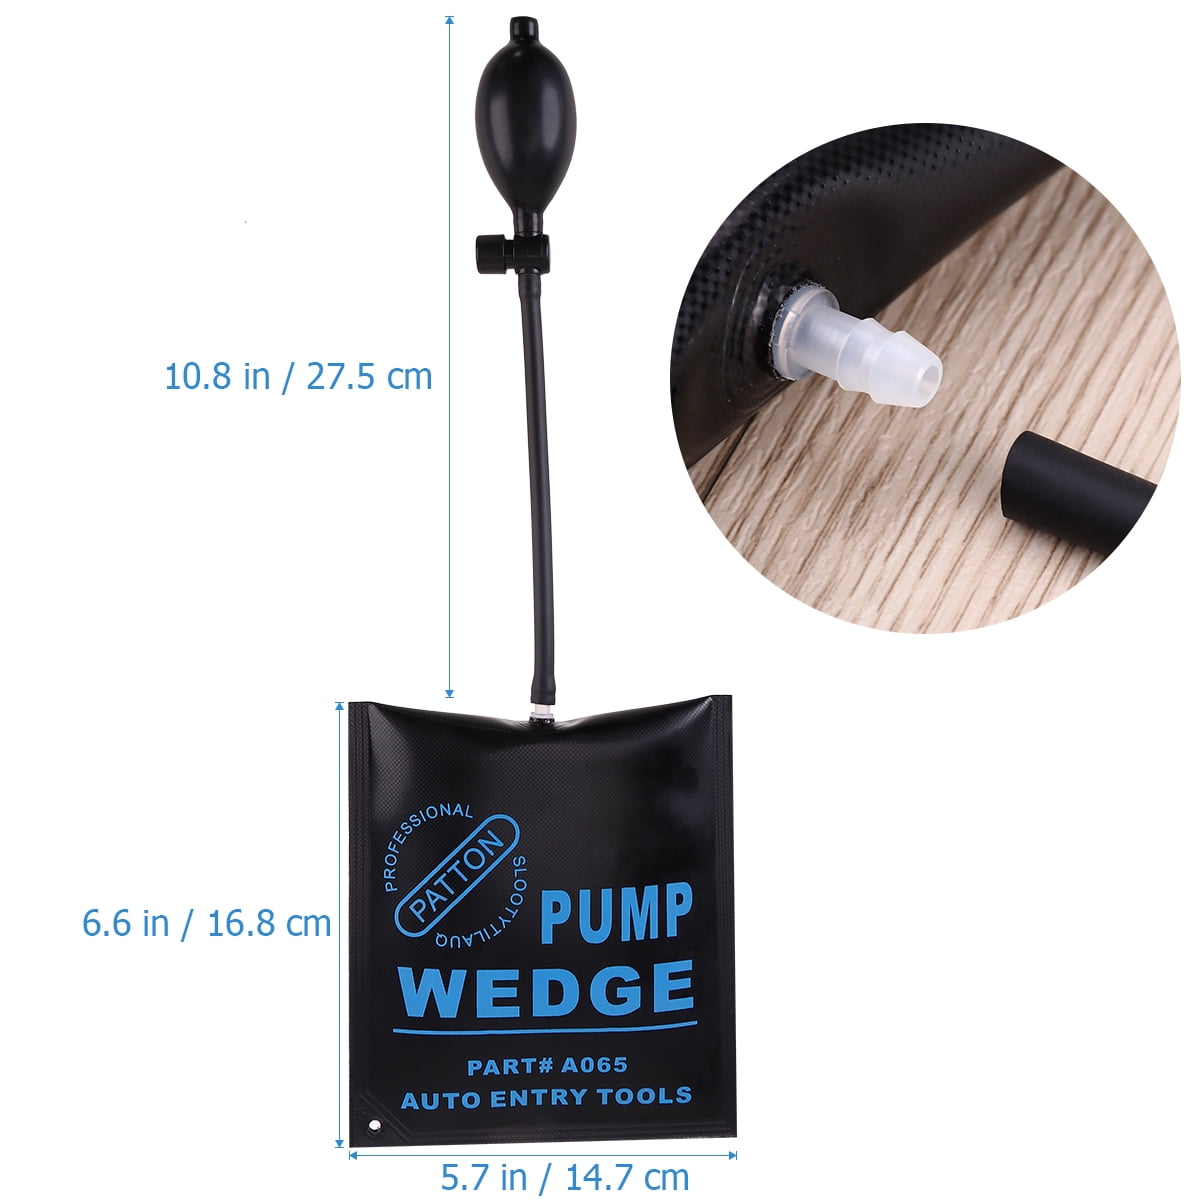 Buy Wholesale China Fuli Universal Air Pump Wedge Inflatable Bag Shim Air  Wedge Door Window Furniture Car Tool & Air Wedge Pump at USD 1.38